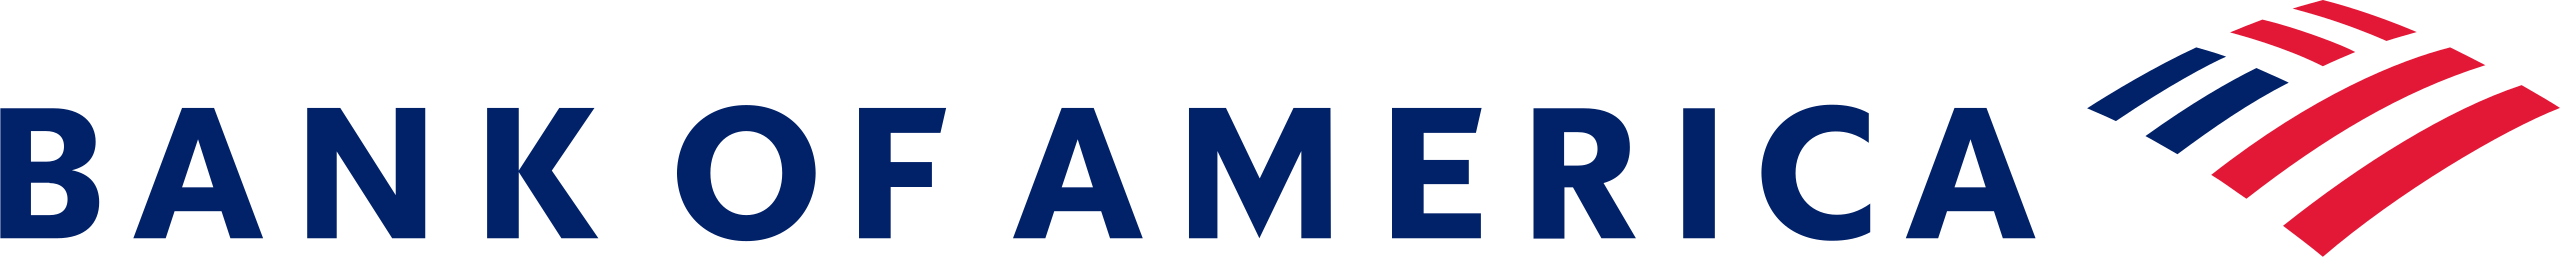 Bank of America Logo<br />
